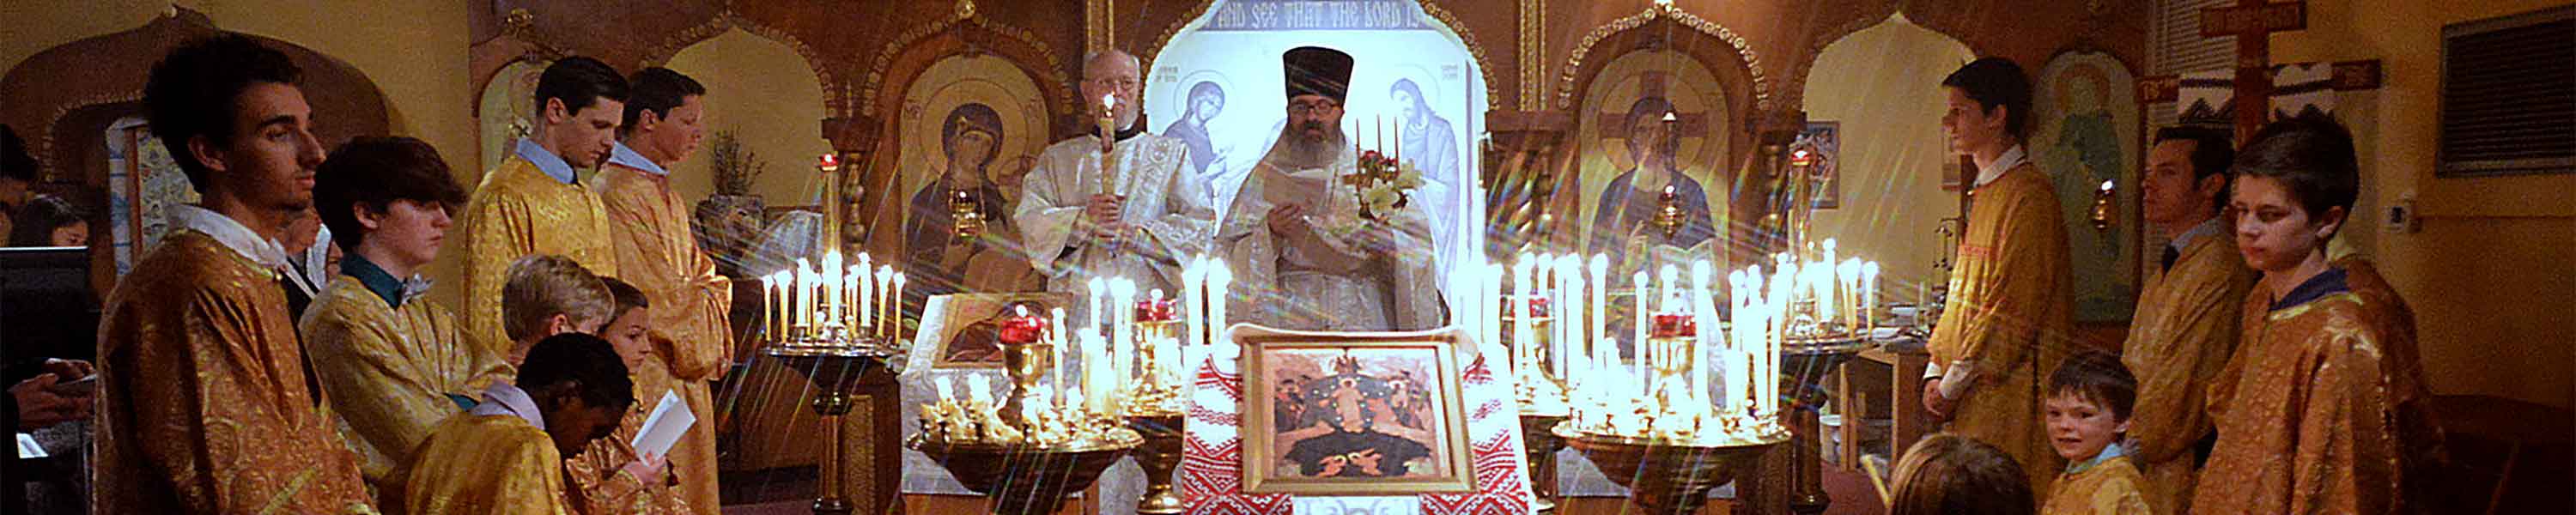 The Paschal Homily of St. John Chrysostom, Given on Pascha